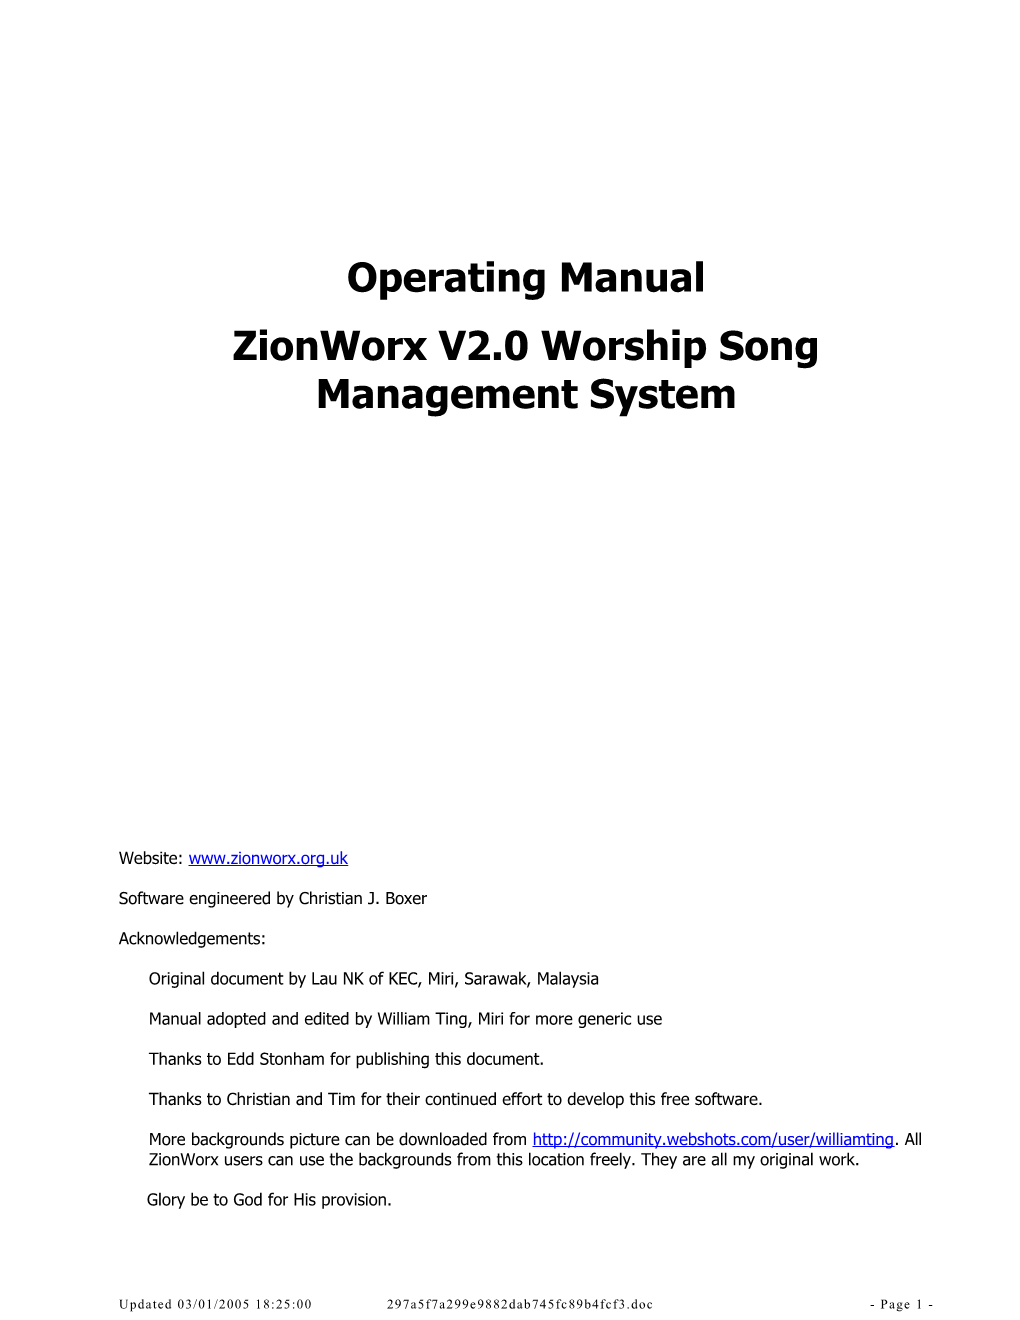 Zionworx V2.0 Worship Song Management System